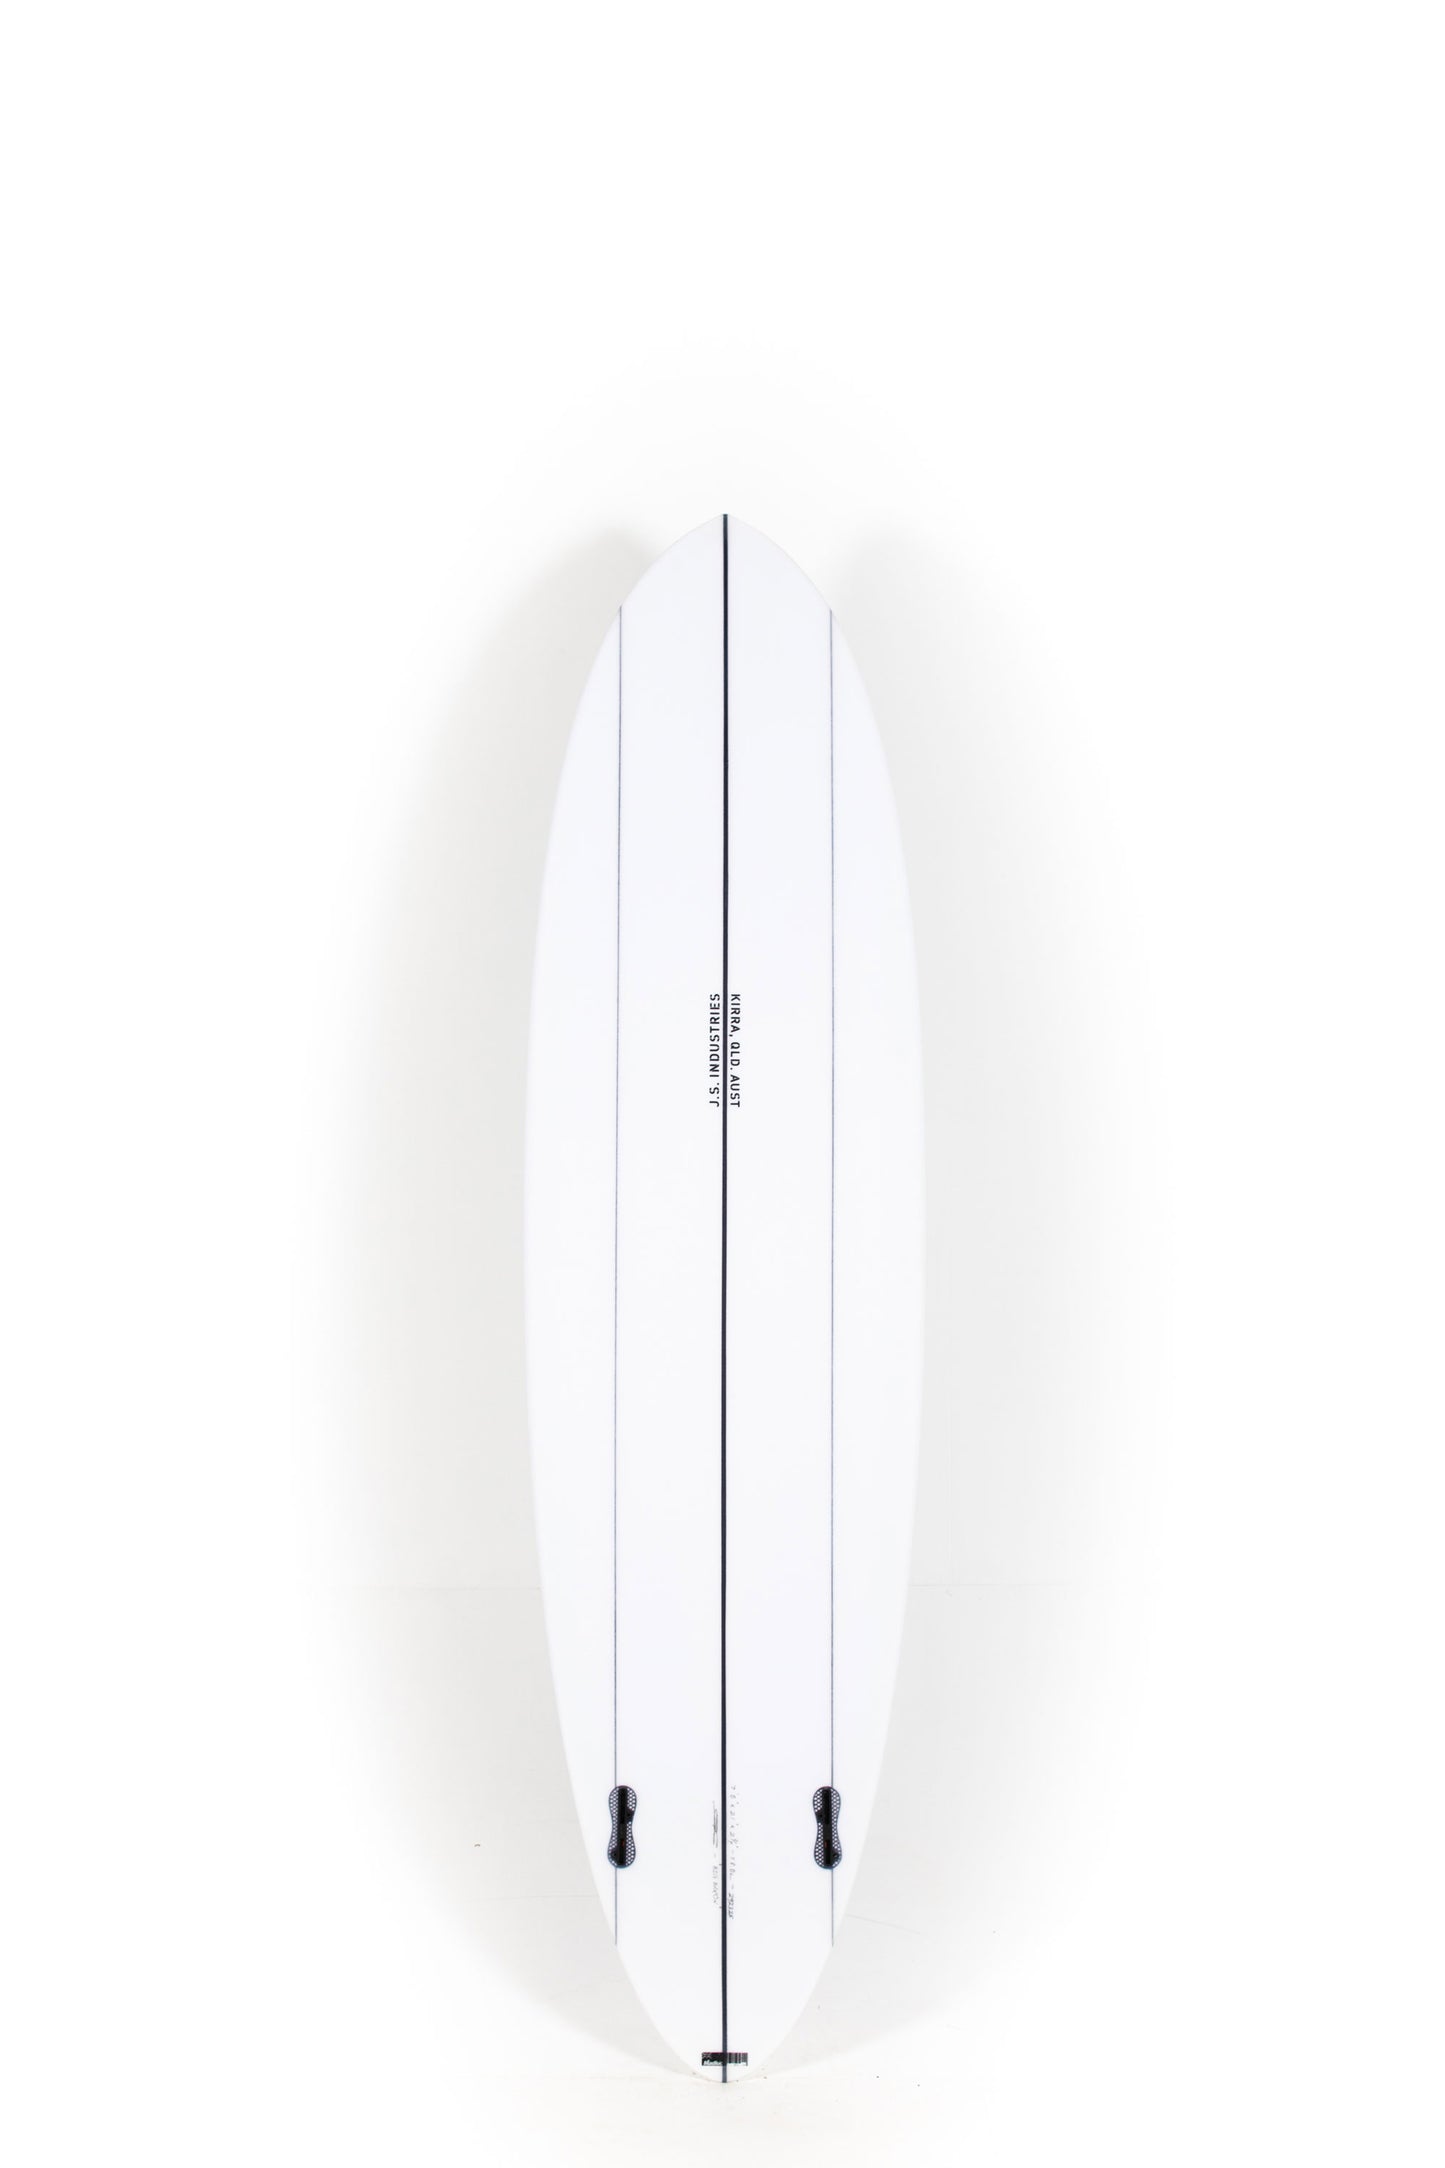 Pukas Surf Shop - JS Surfboards - BIG BARON - 7'0" x 21 x 2,75 x 43L. - BIGBARON70